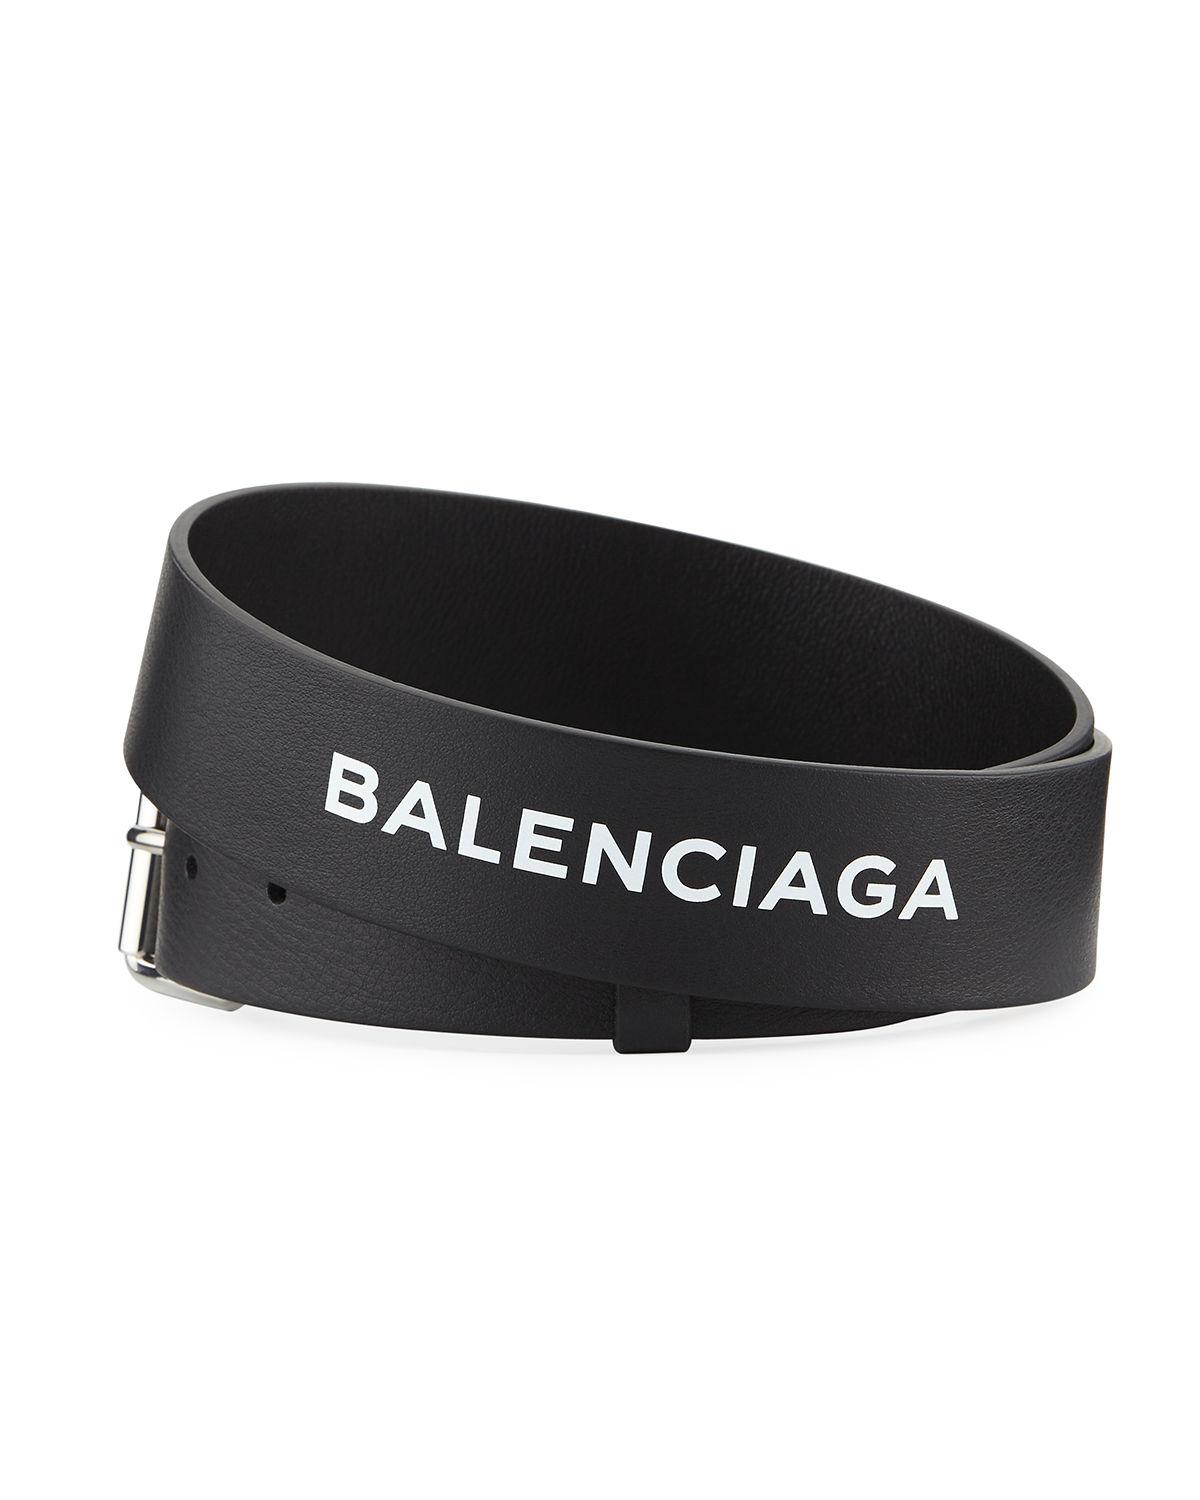 Balenciaga Men's Printed Single Logo Leather Belt in Black for Men - Lyst